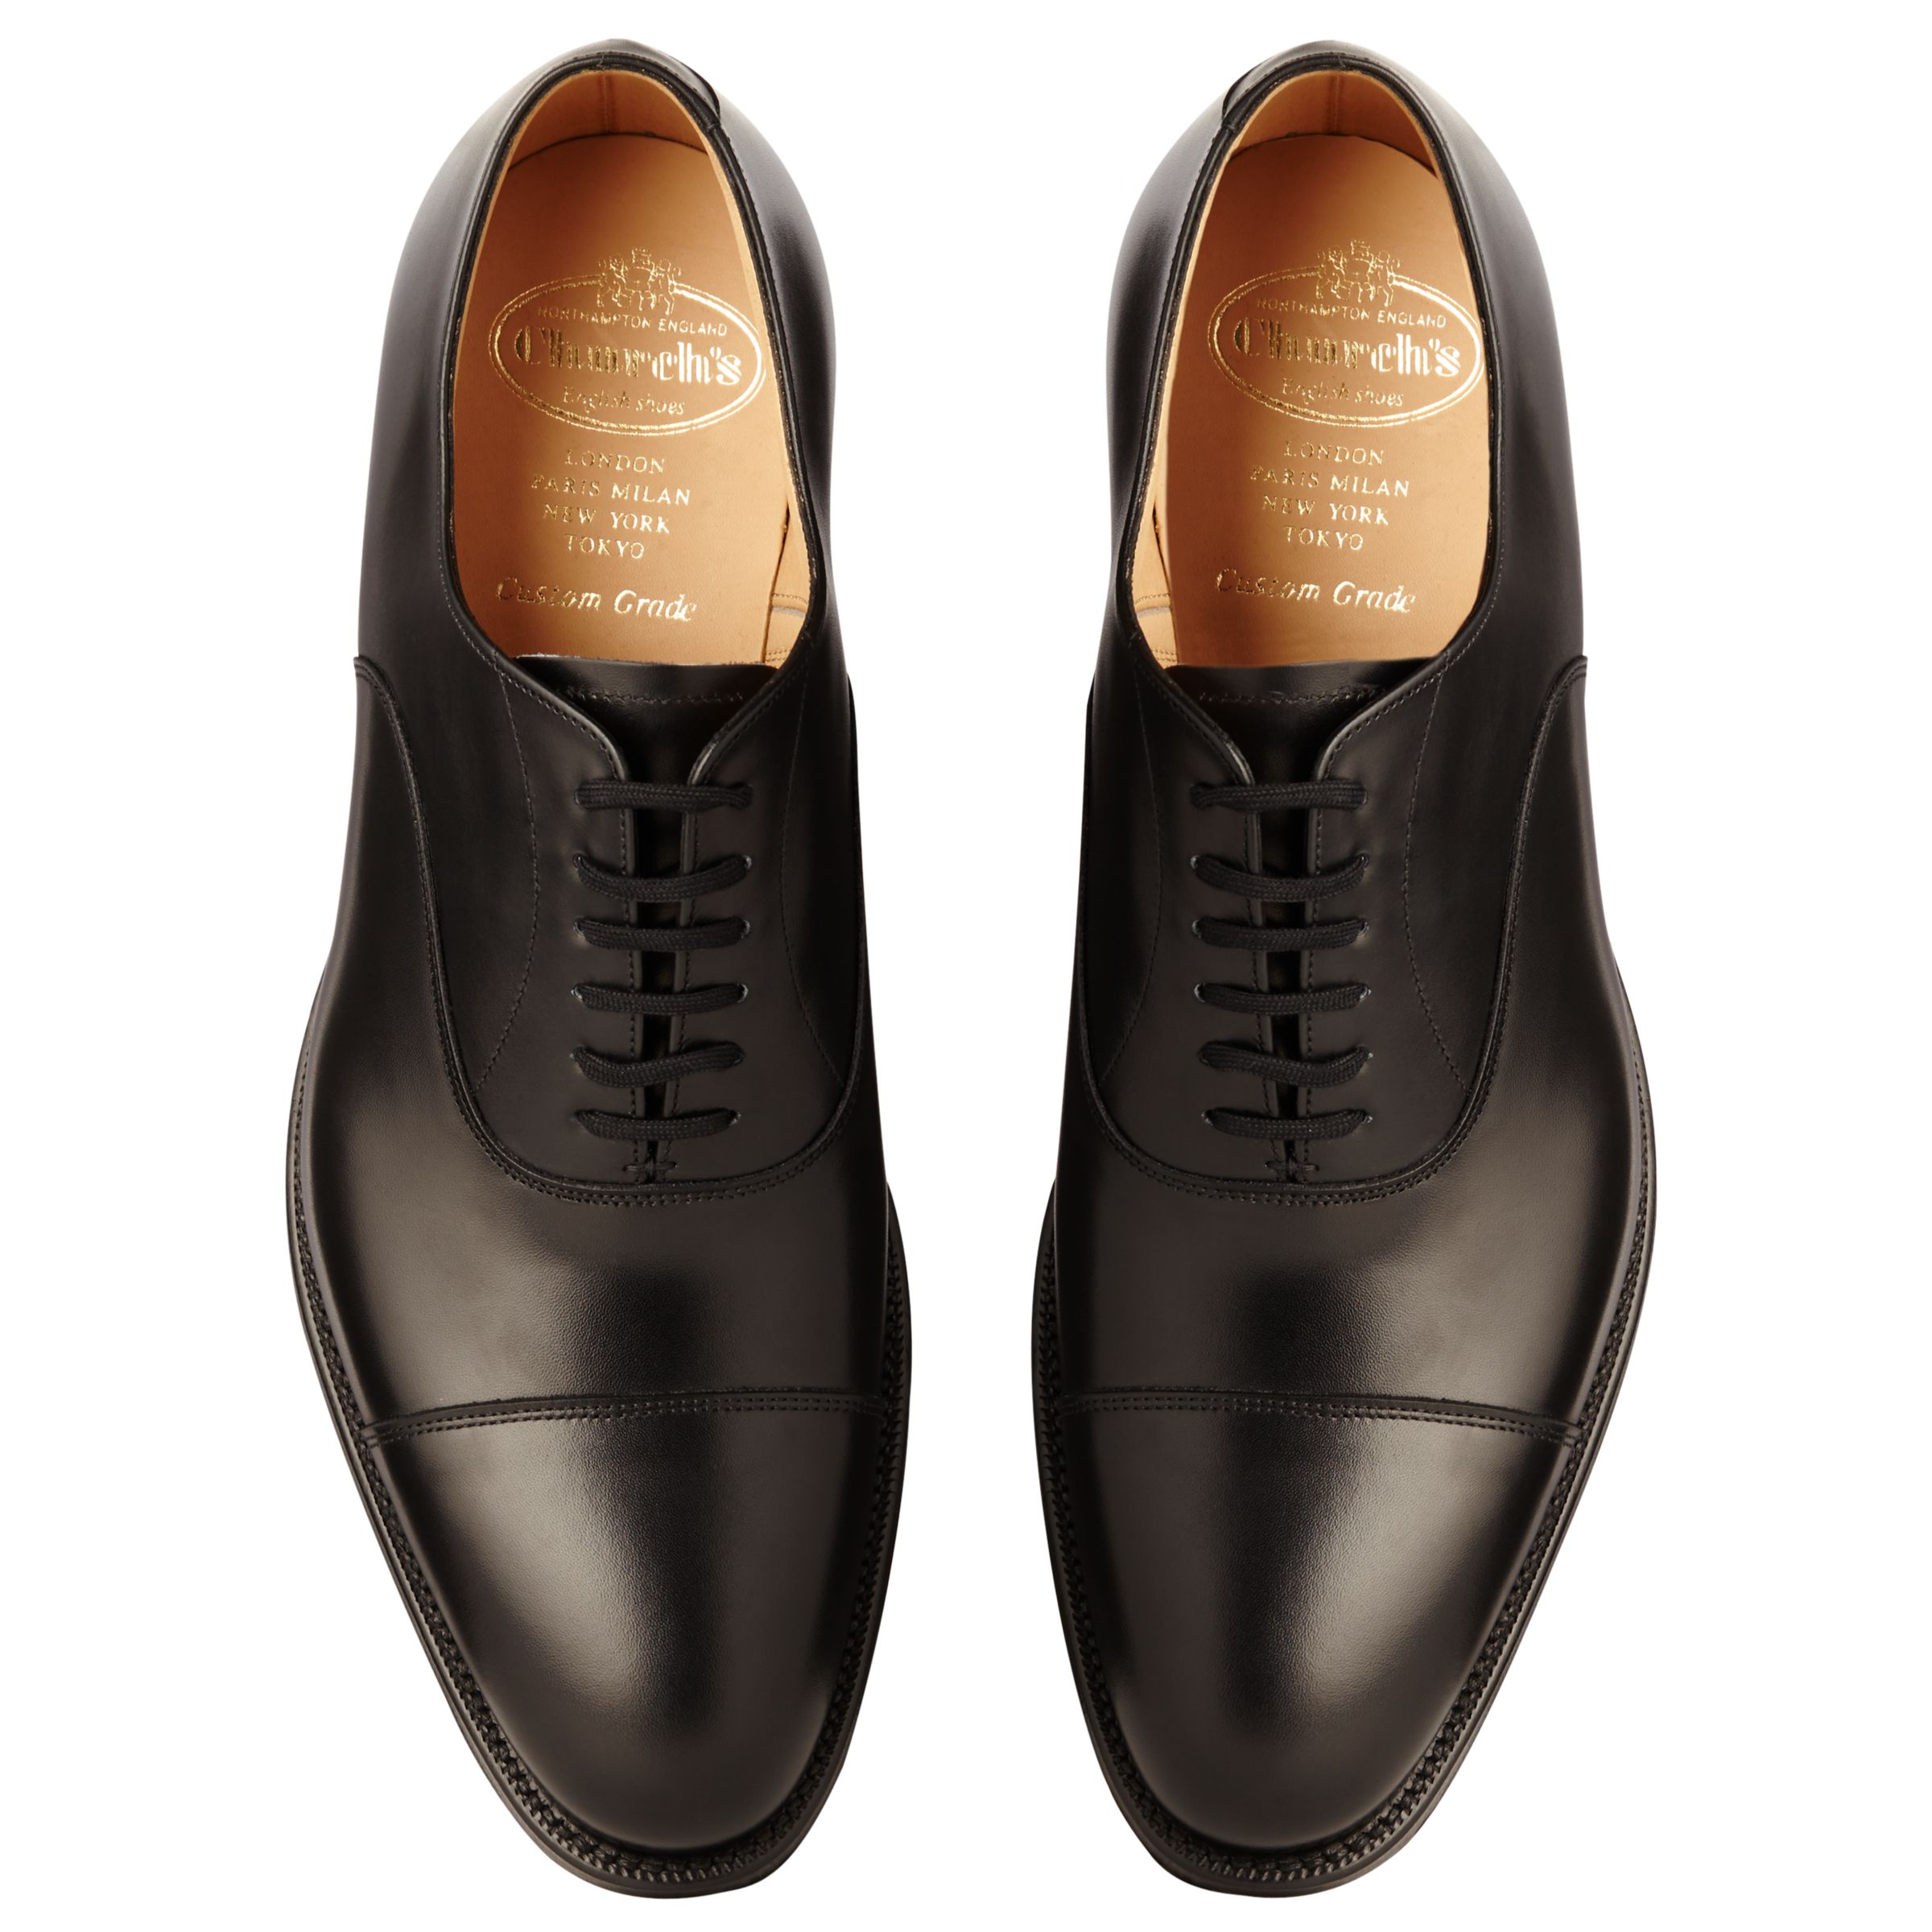 Church's Dubai Leather Oxford Shoes, Black at John Lewis & Partners